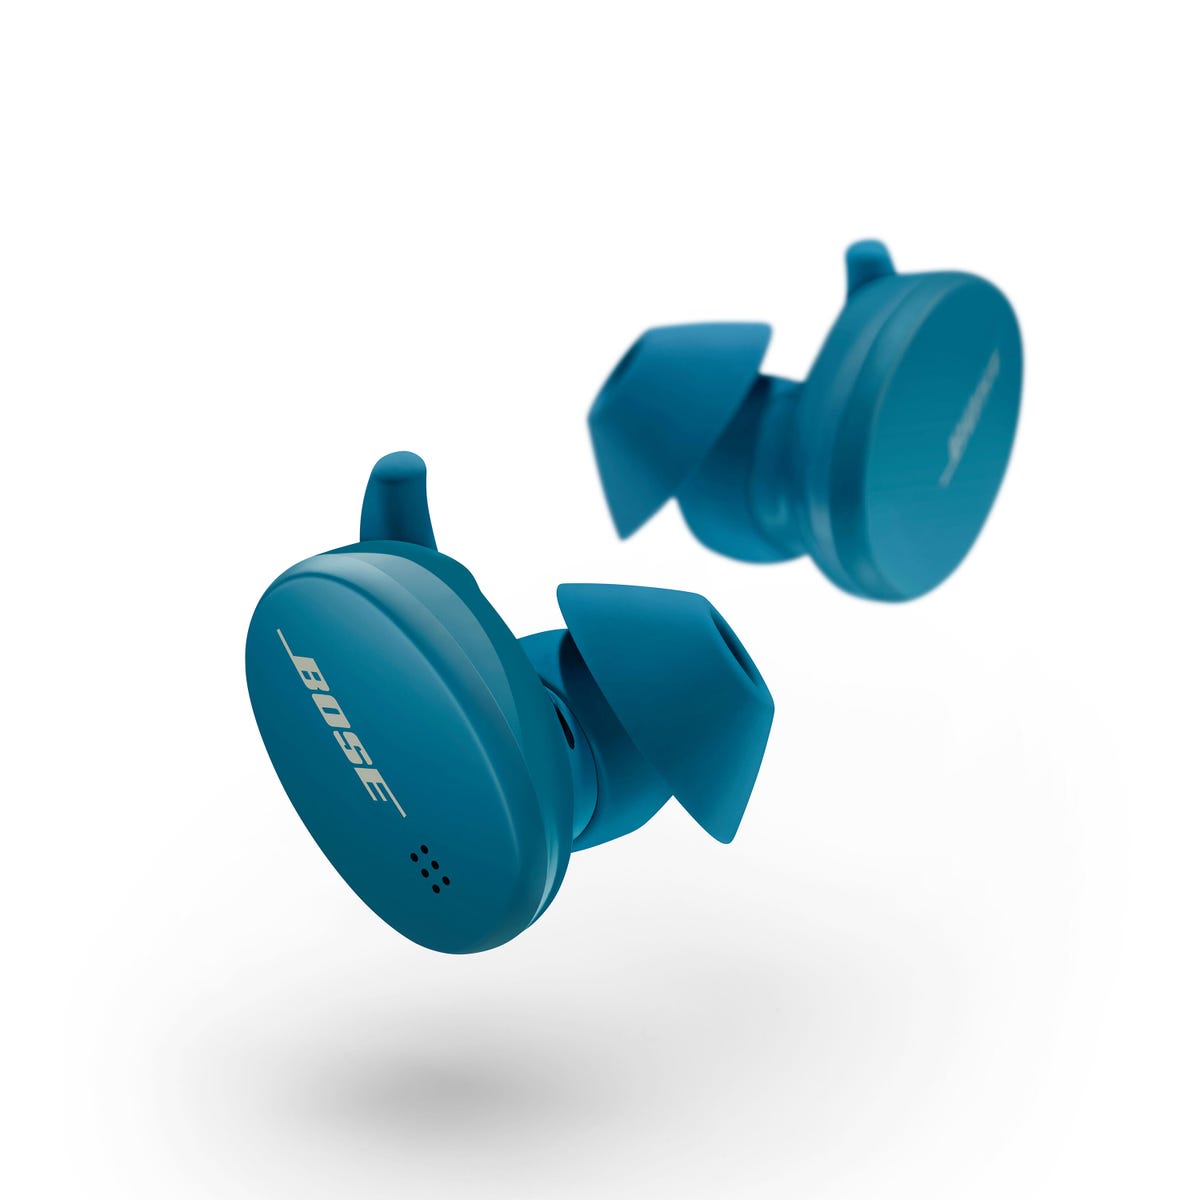 bose-sport-earbuds-baltic-blue-1